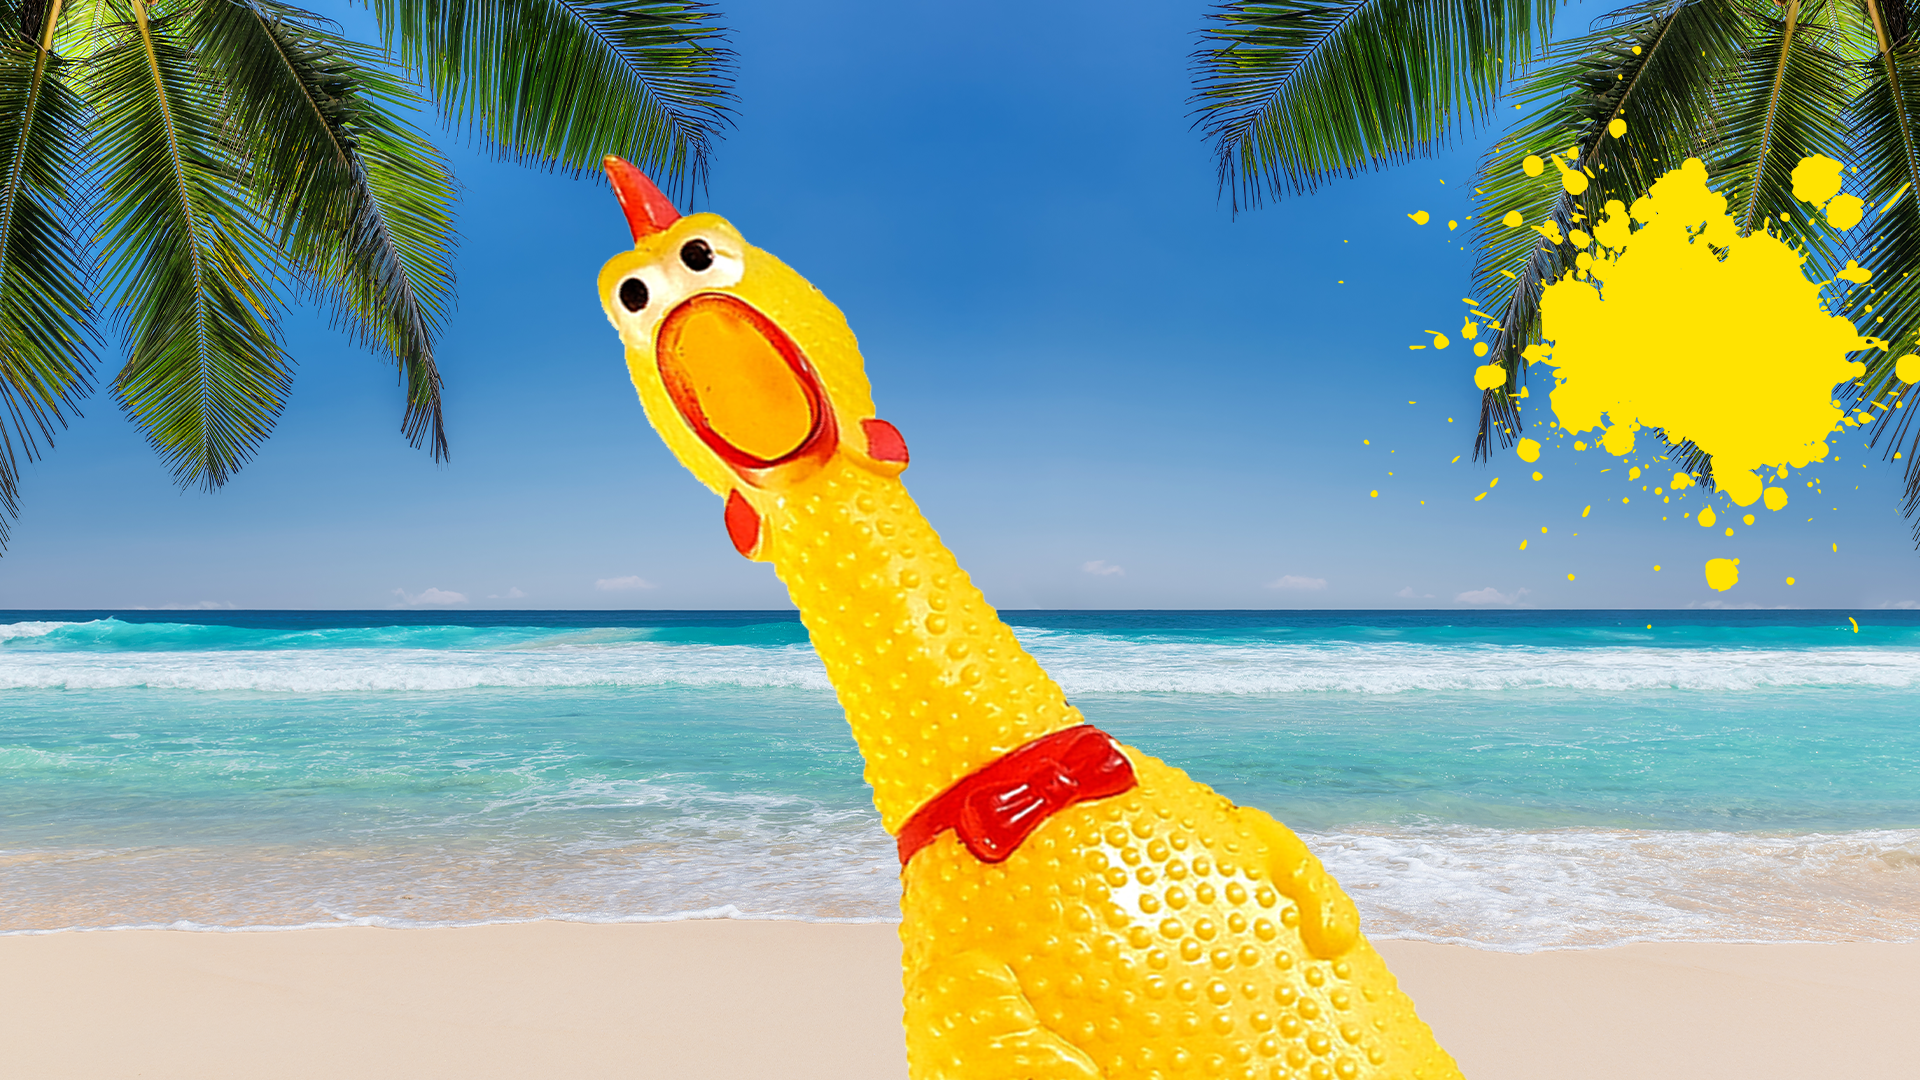 Rubber chicken on tropical beach